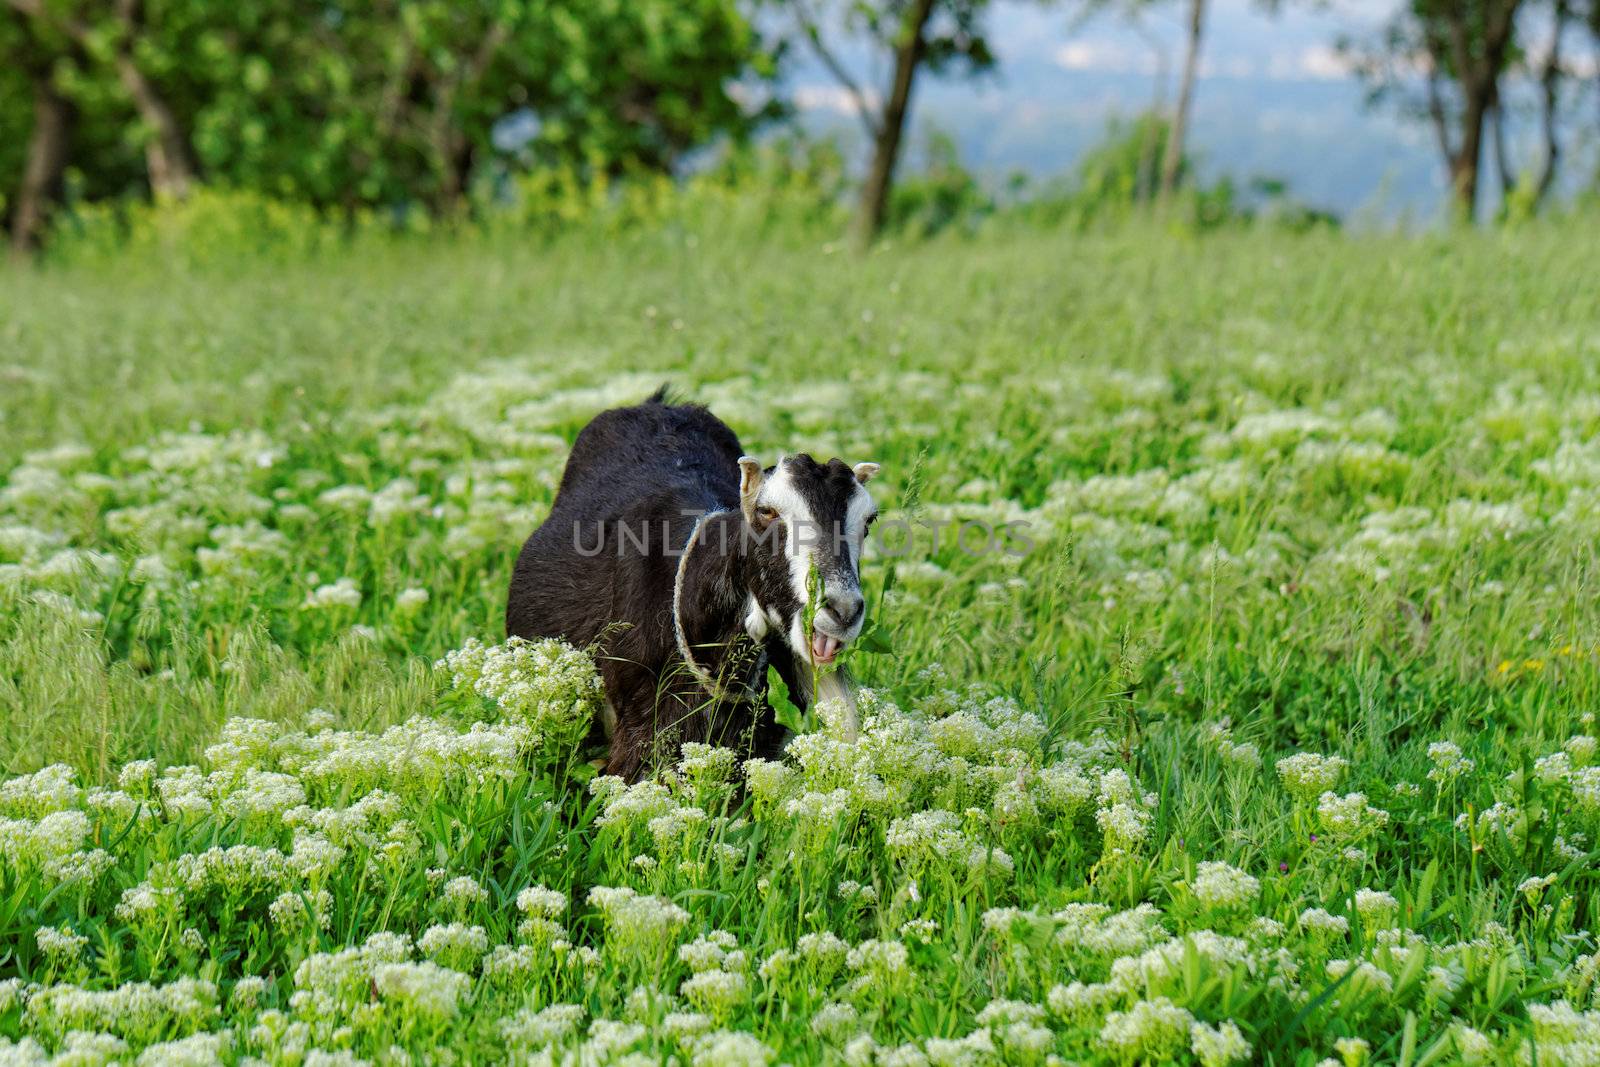 Goats grazing by NagyDodo